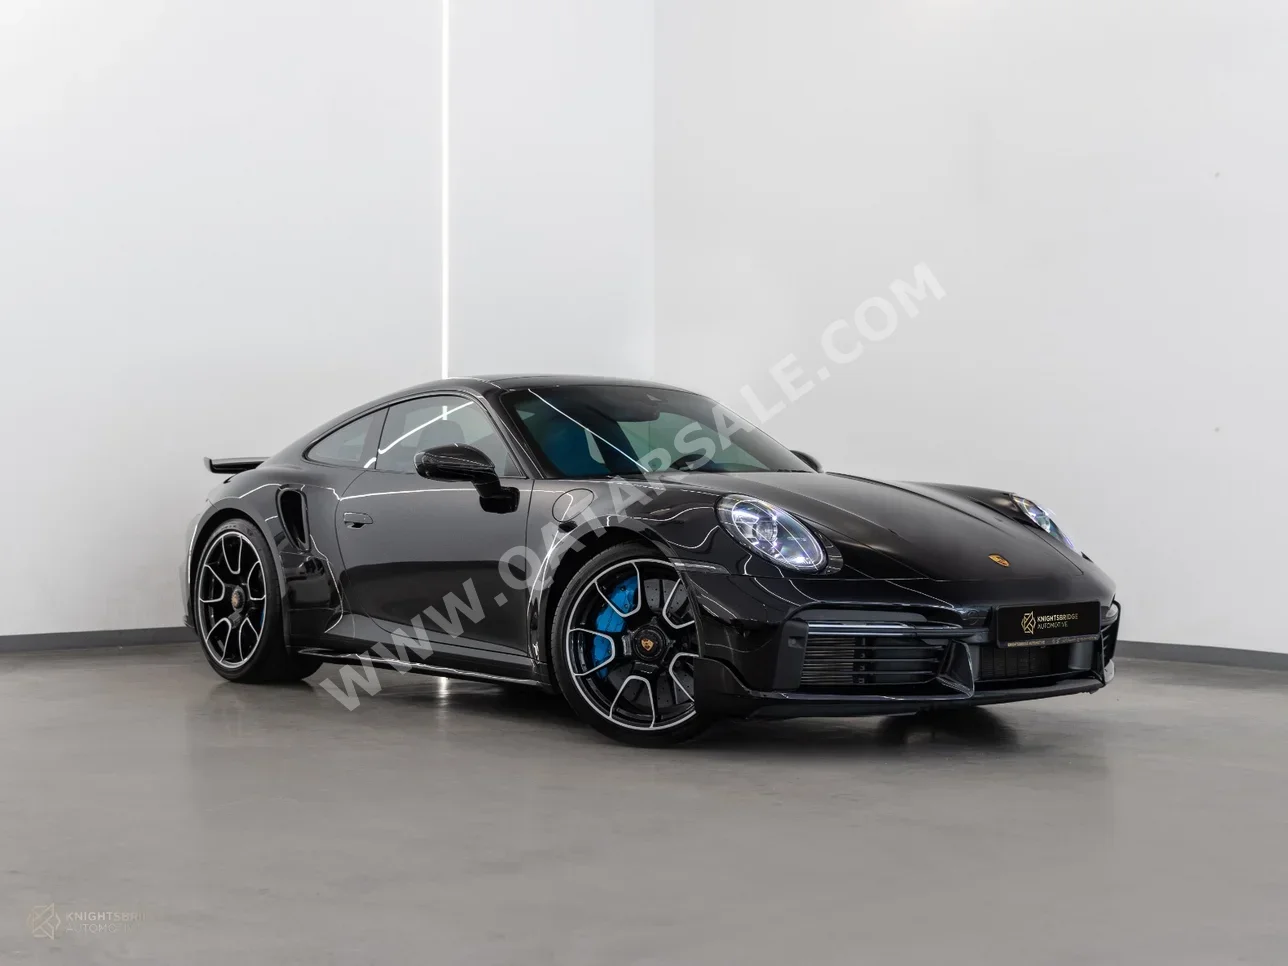 Porsche  911  Turbo S  2023  Automatic  18,600 Km  6 Cylinder  Rear Wheel Drive (RWD)  Coupe / Sport  Black  With Warranty